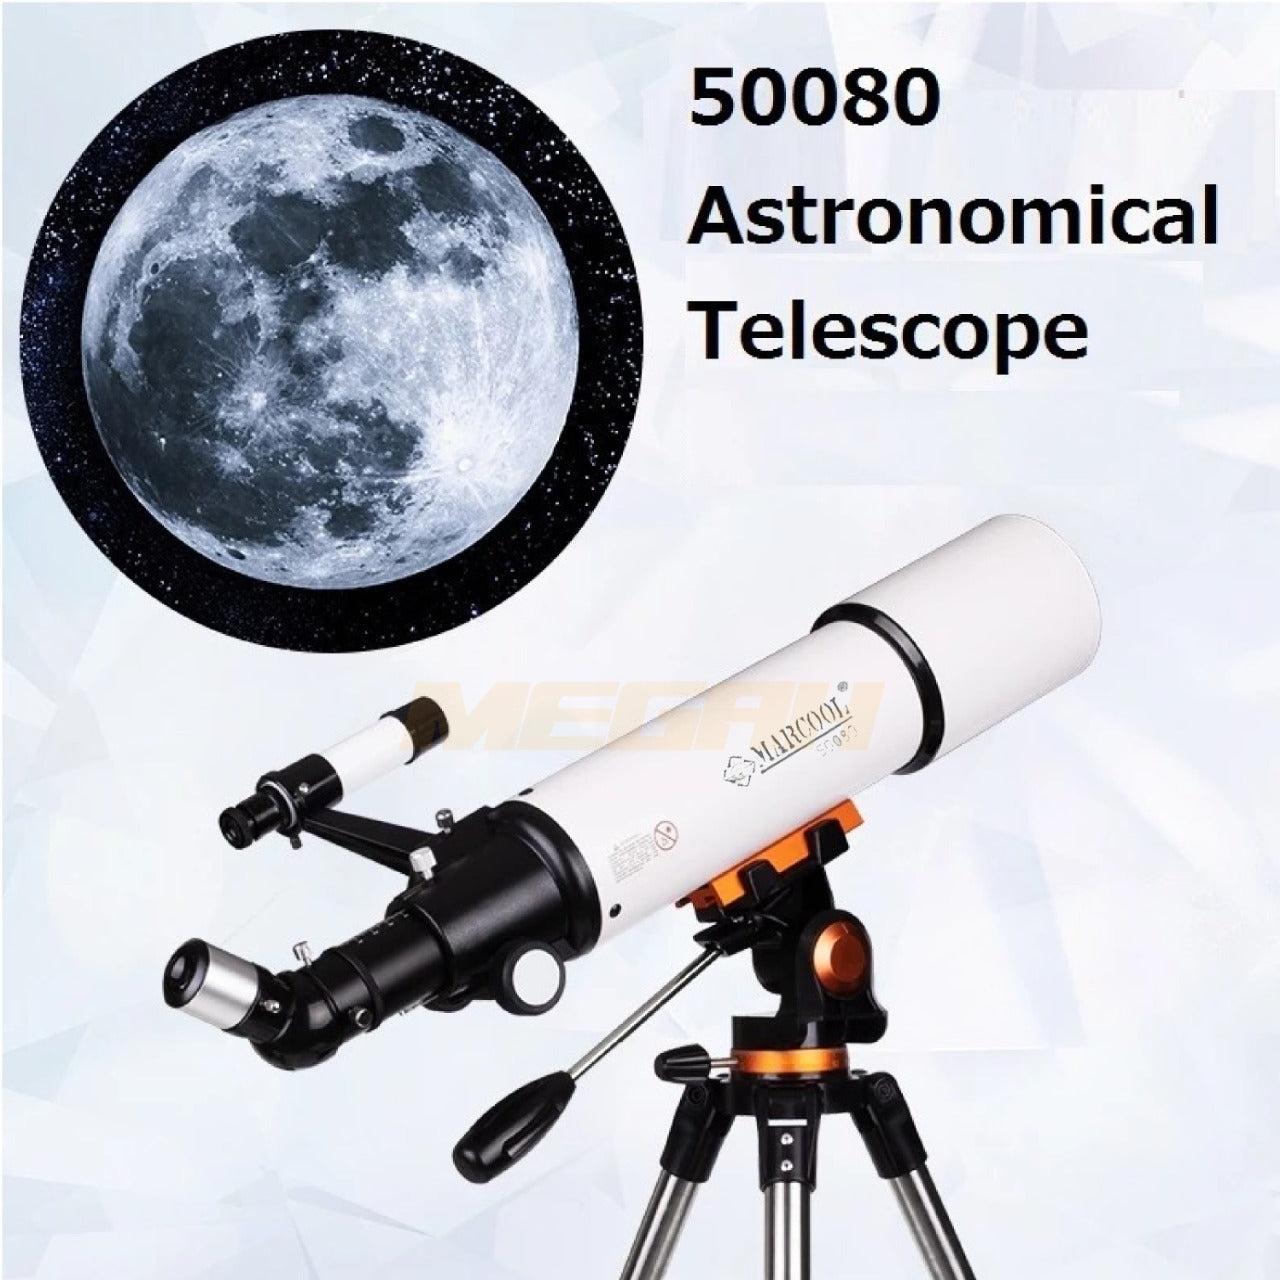 TEROPONG ASTRONOMI MARCOOL 50080 (BN851)